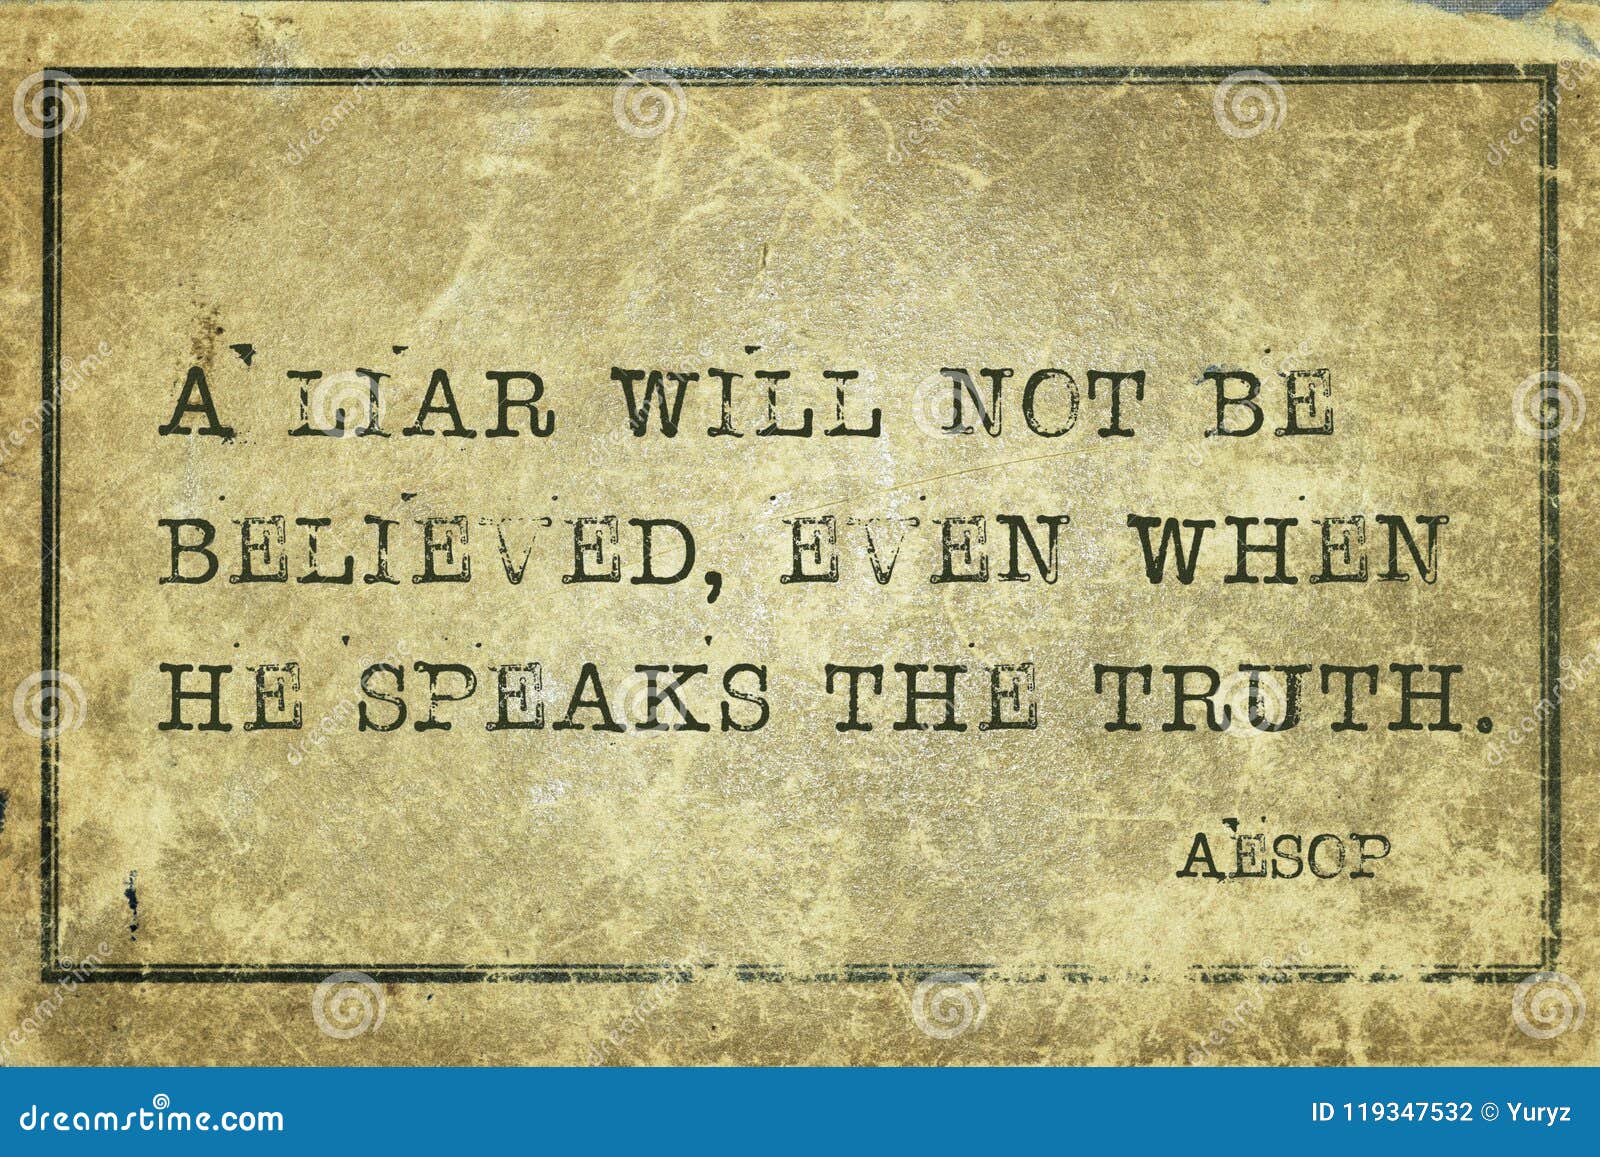 liar not be aesop